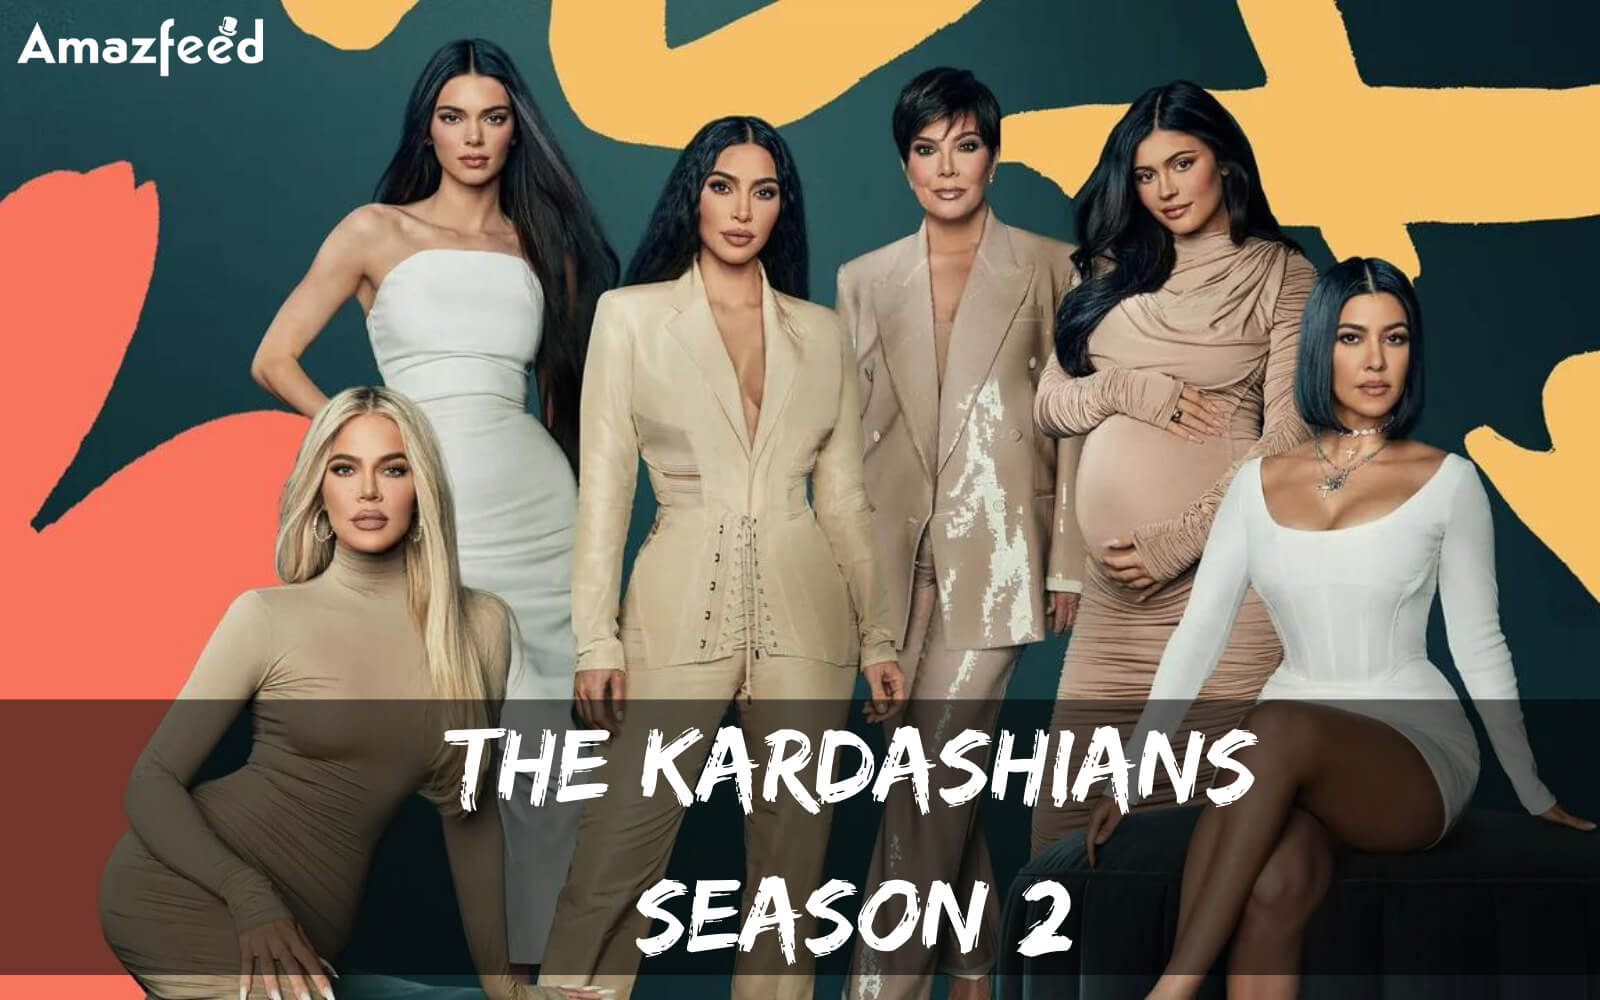 The Kardashians Season 2 Release Date, Cast, Plot All We Know So Far